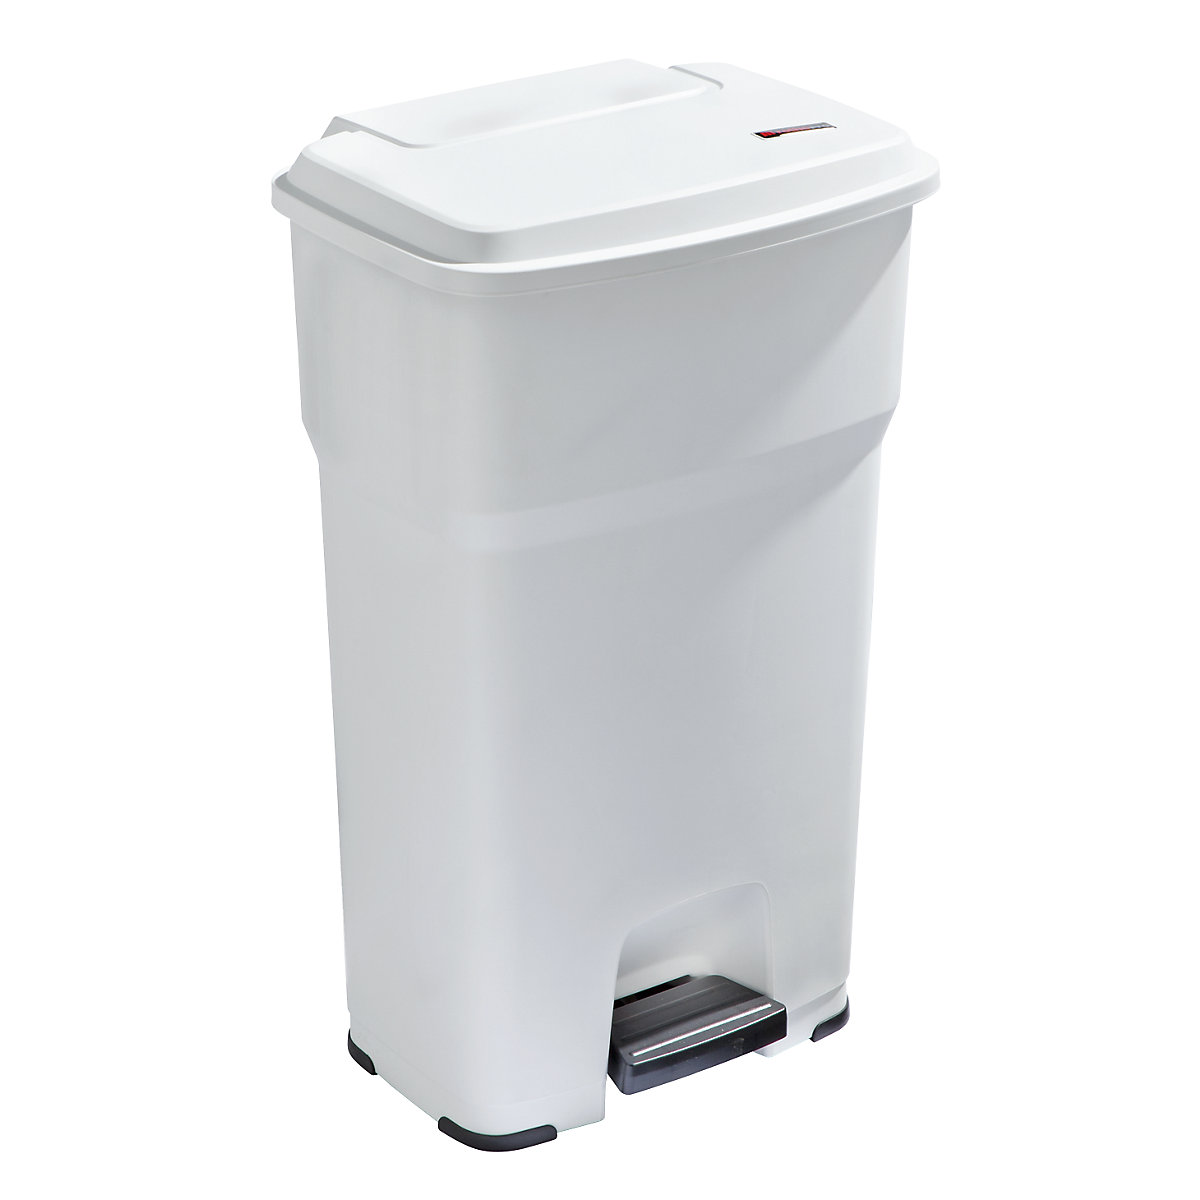 Coletor de lixo com pedal HERA – rothopro, volume 85 l, LxAxP 490 x 790 x 390 mm, branco-7